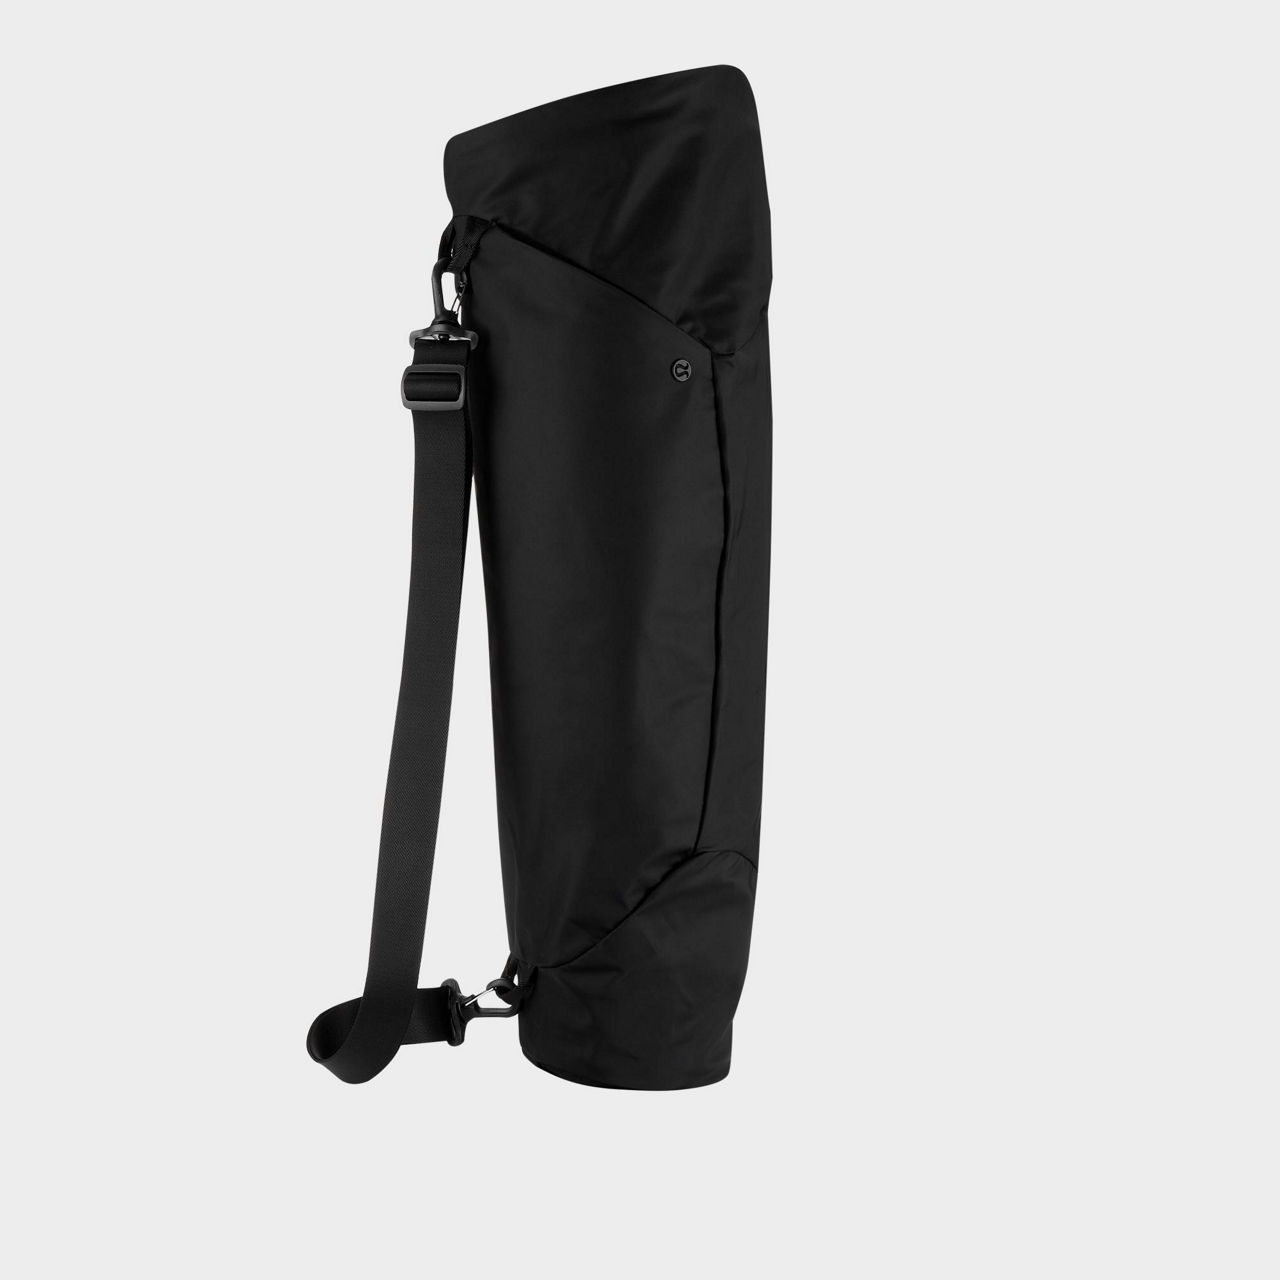 LULULEMON Adjustable Yoga Mat Bag